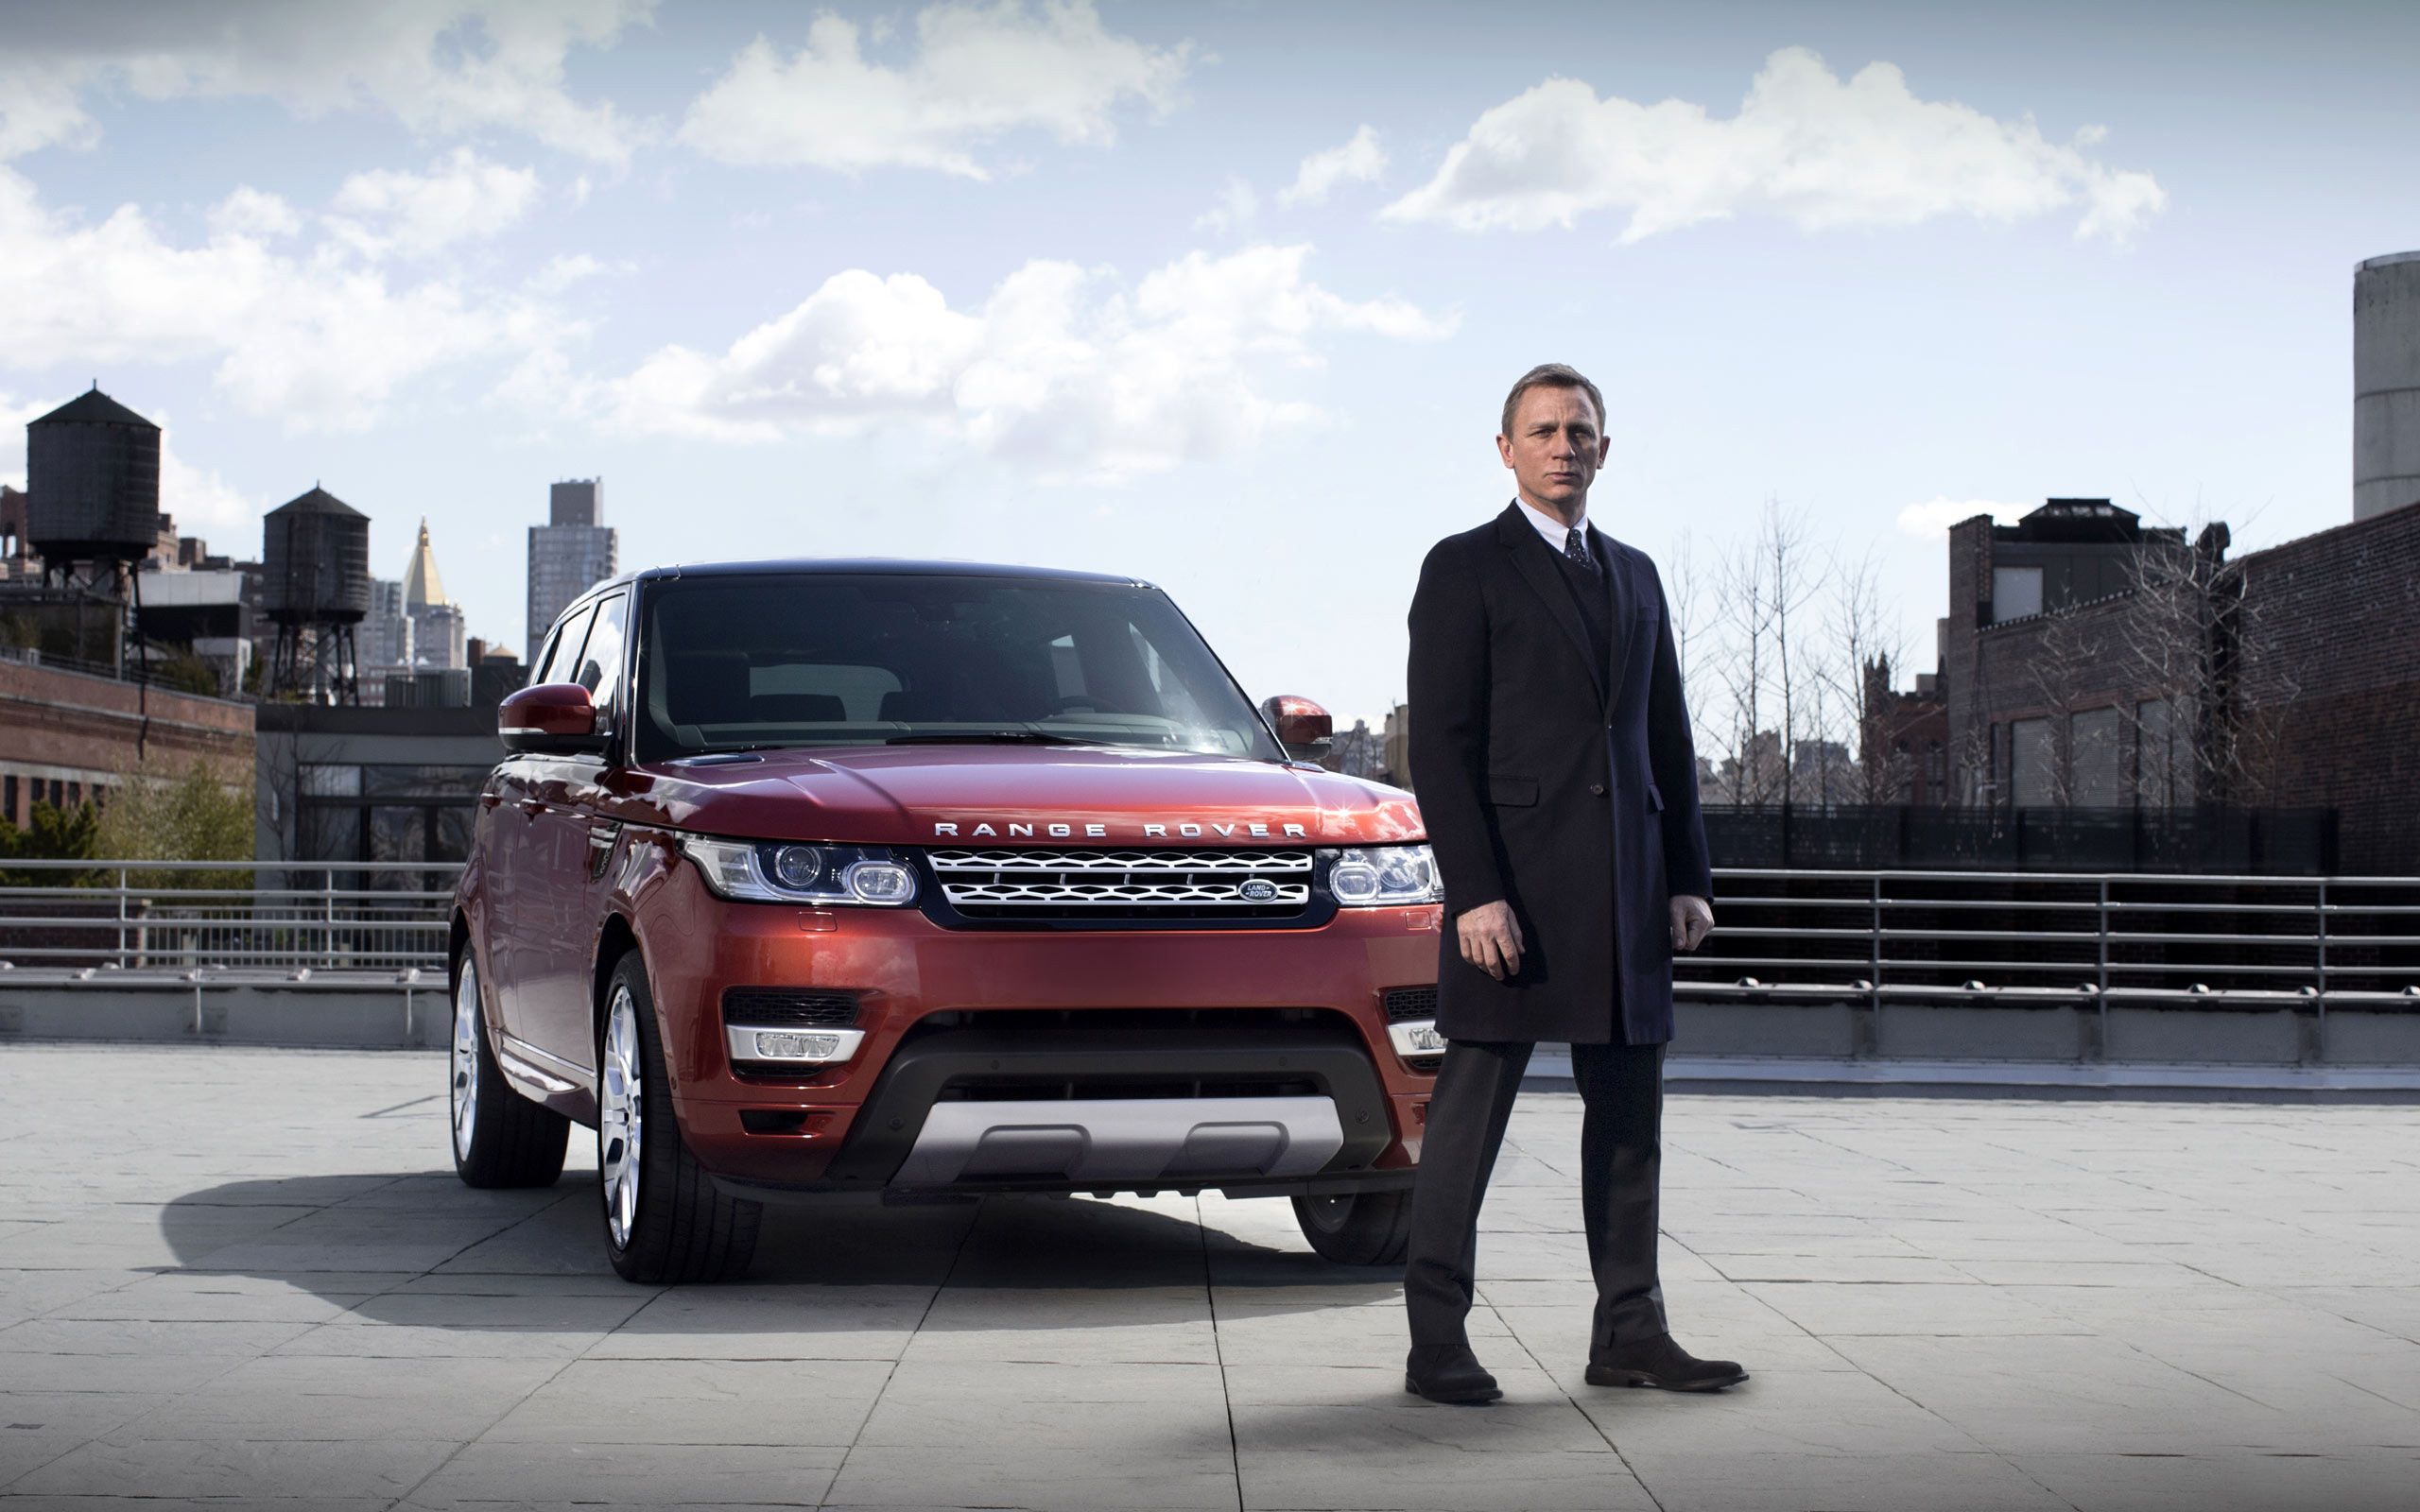 Range Rover Sport Photohoot